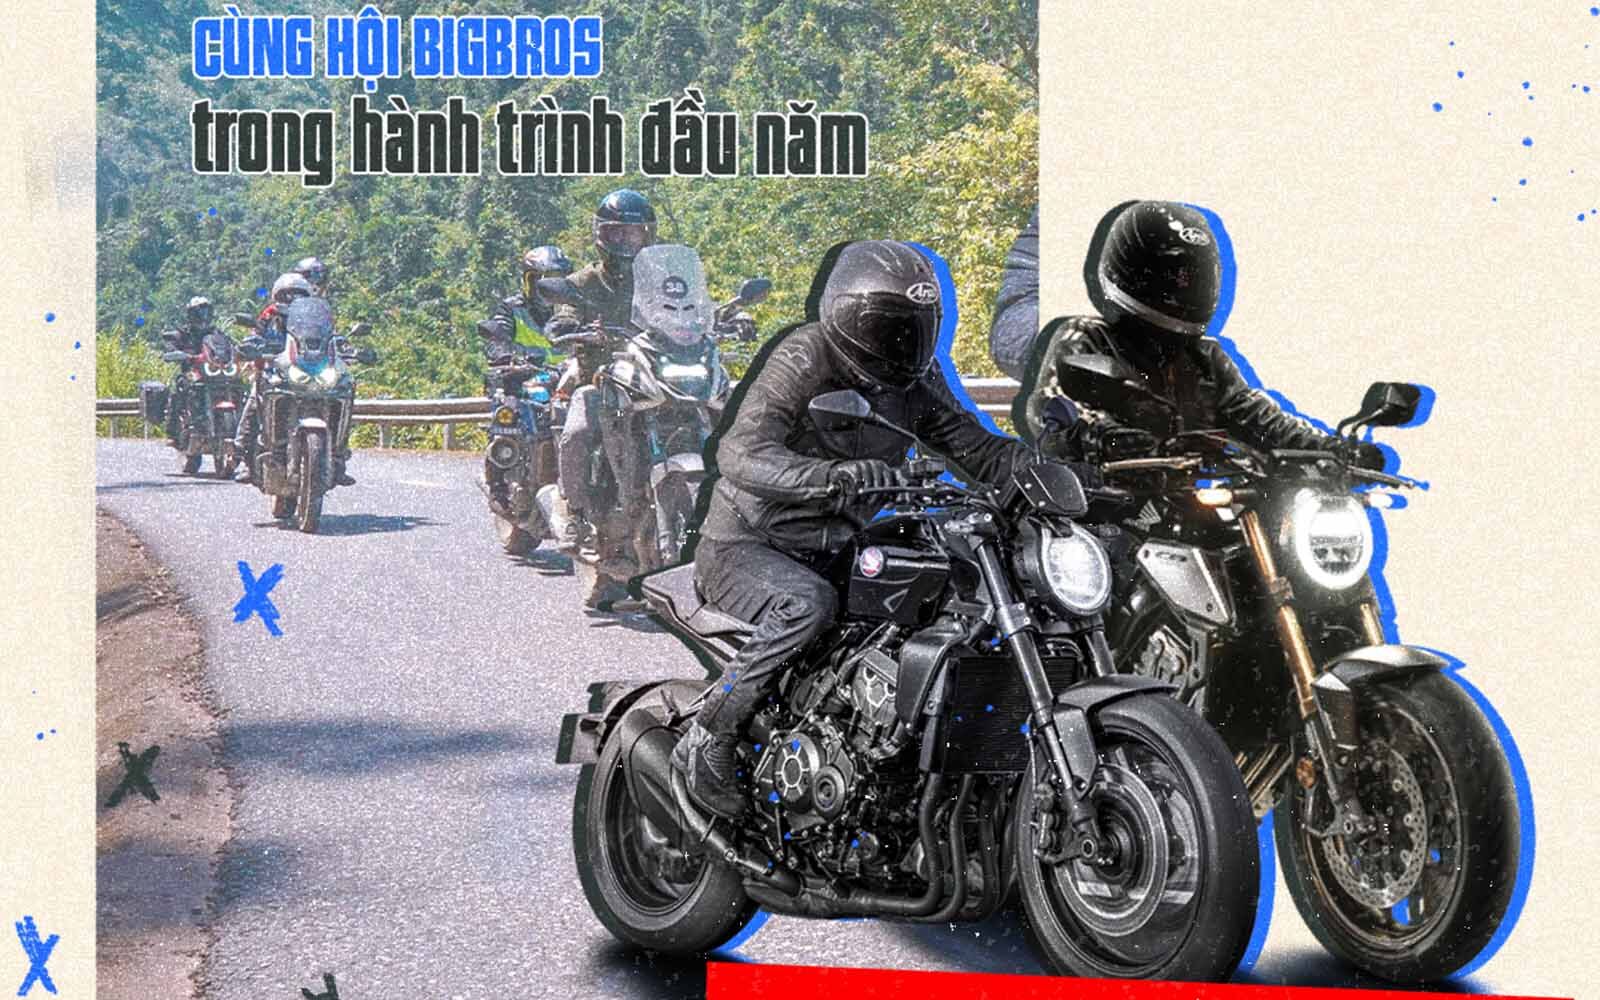 VungTau biker